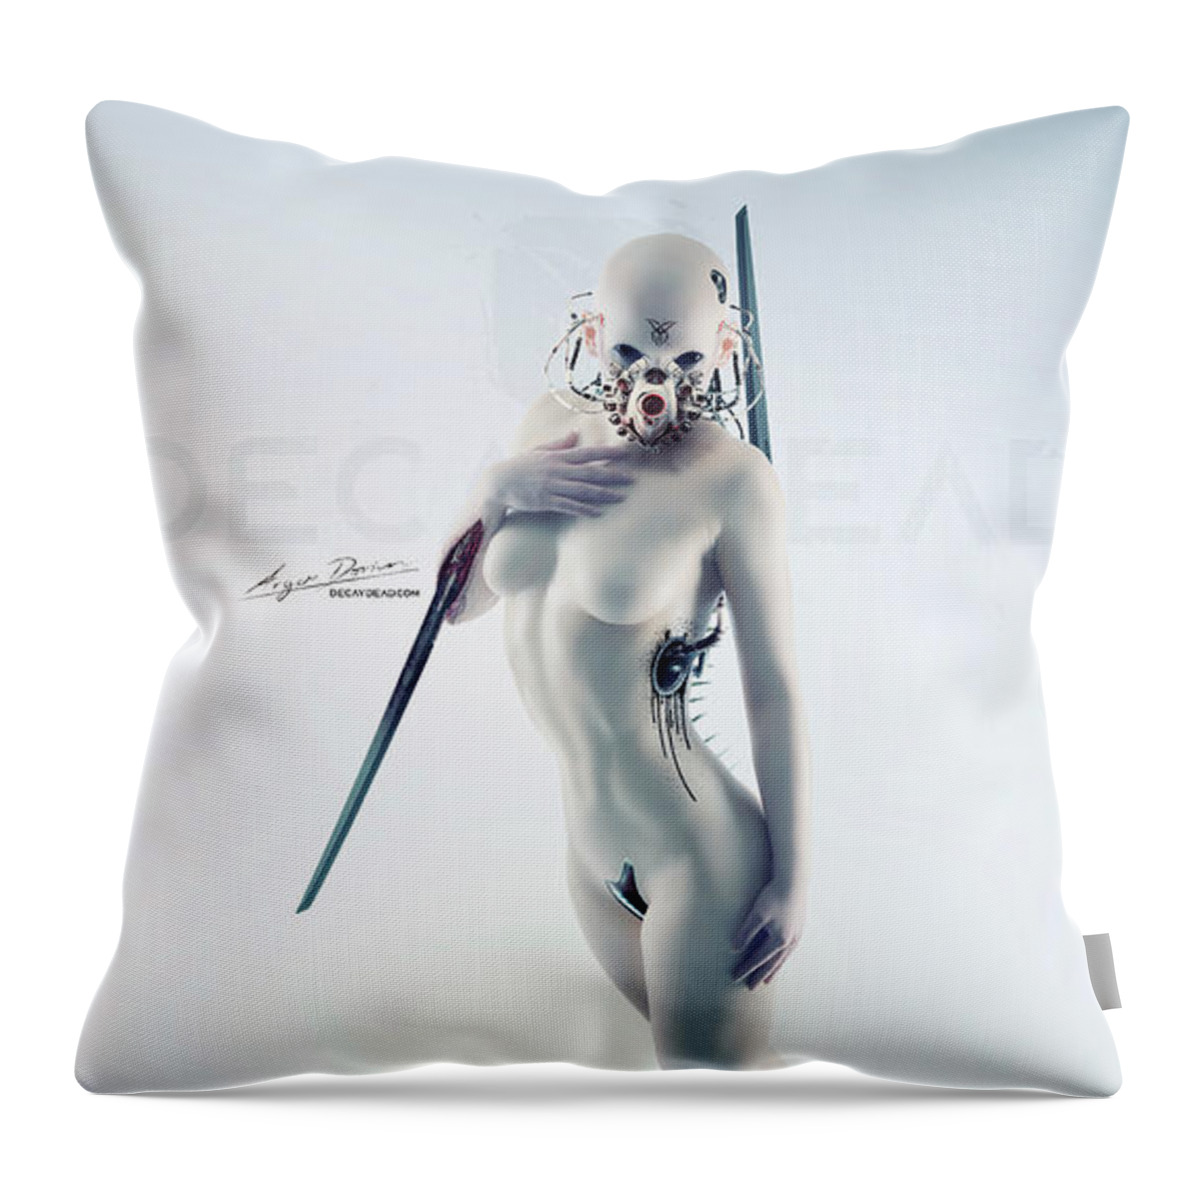 Argus Dorian Throw Pillow featuring the digital art Elina the leader of the Assassins by Argus Dorian